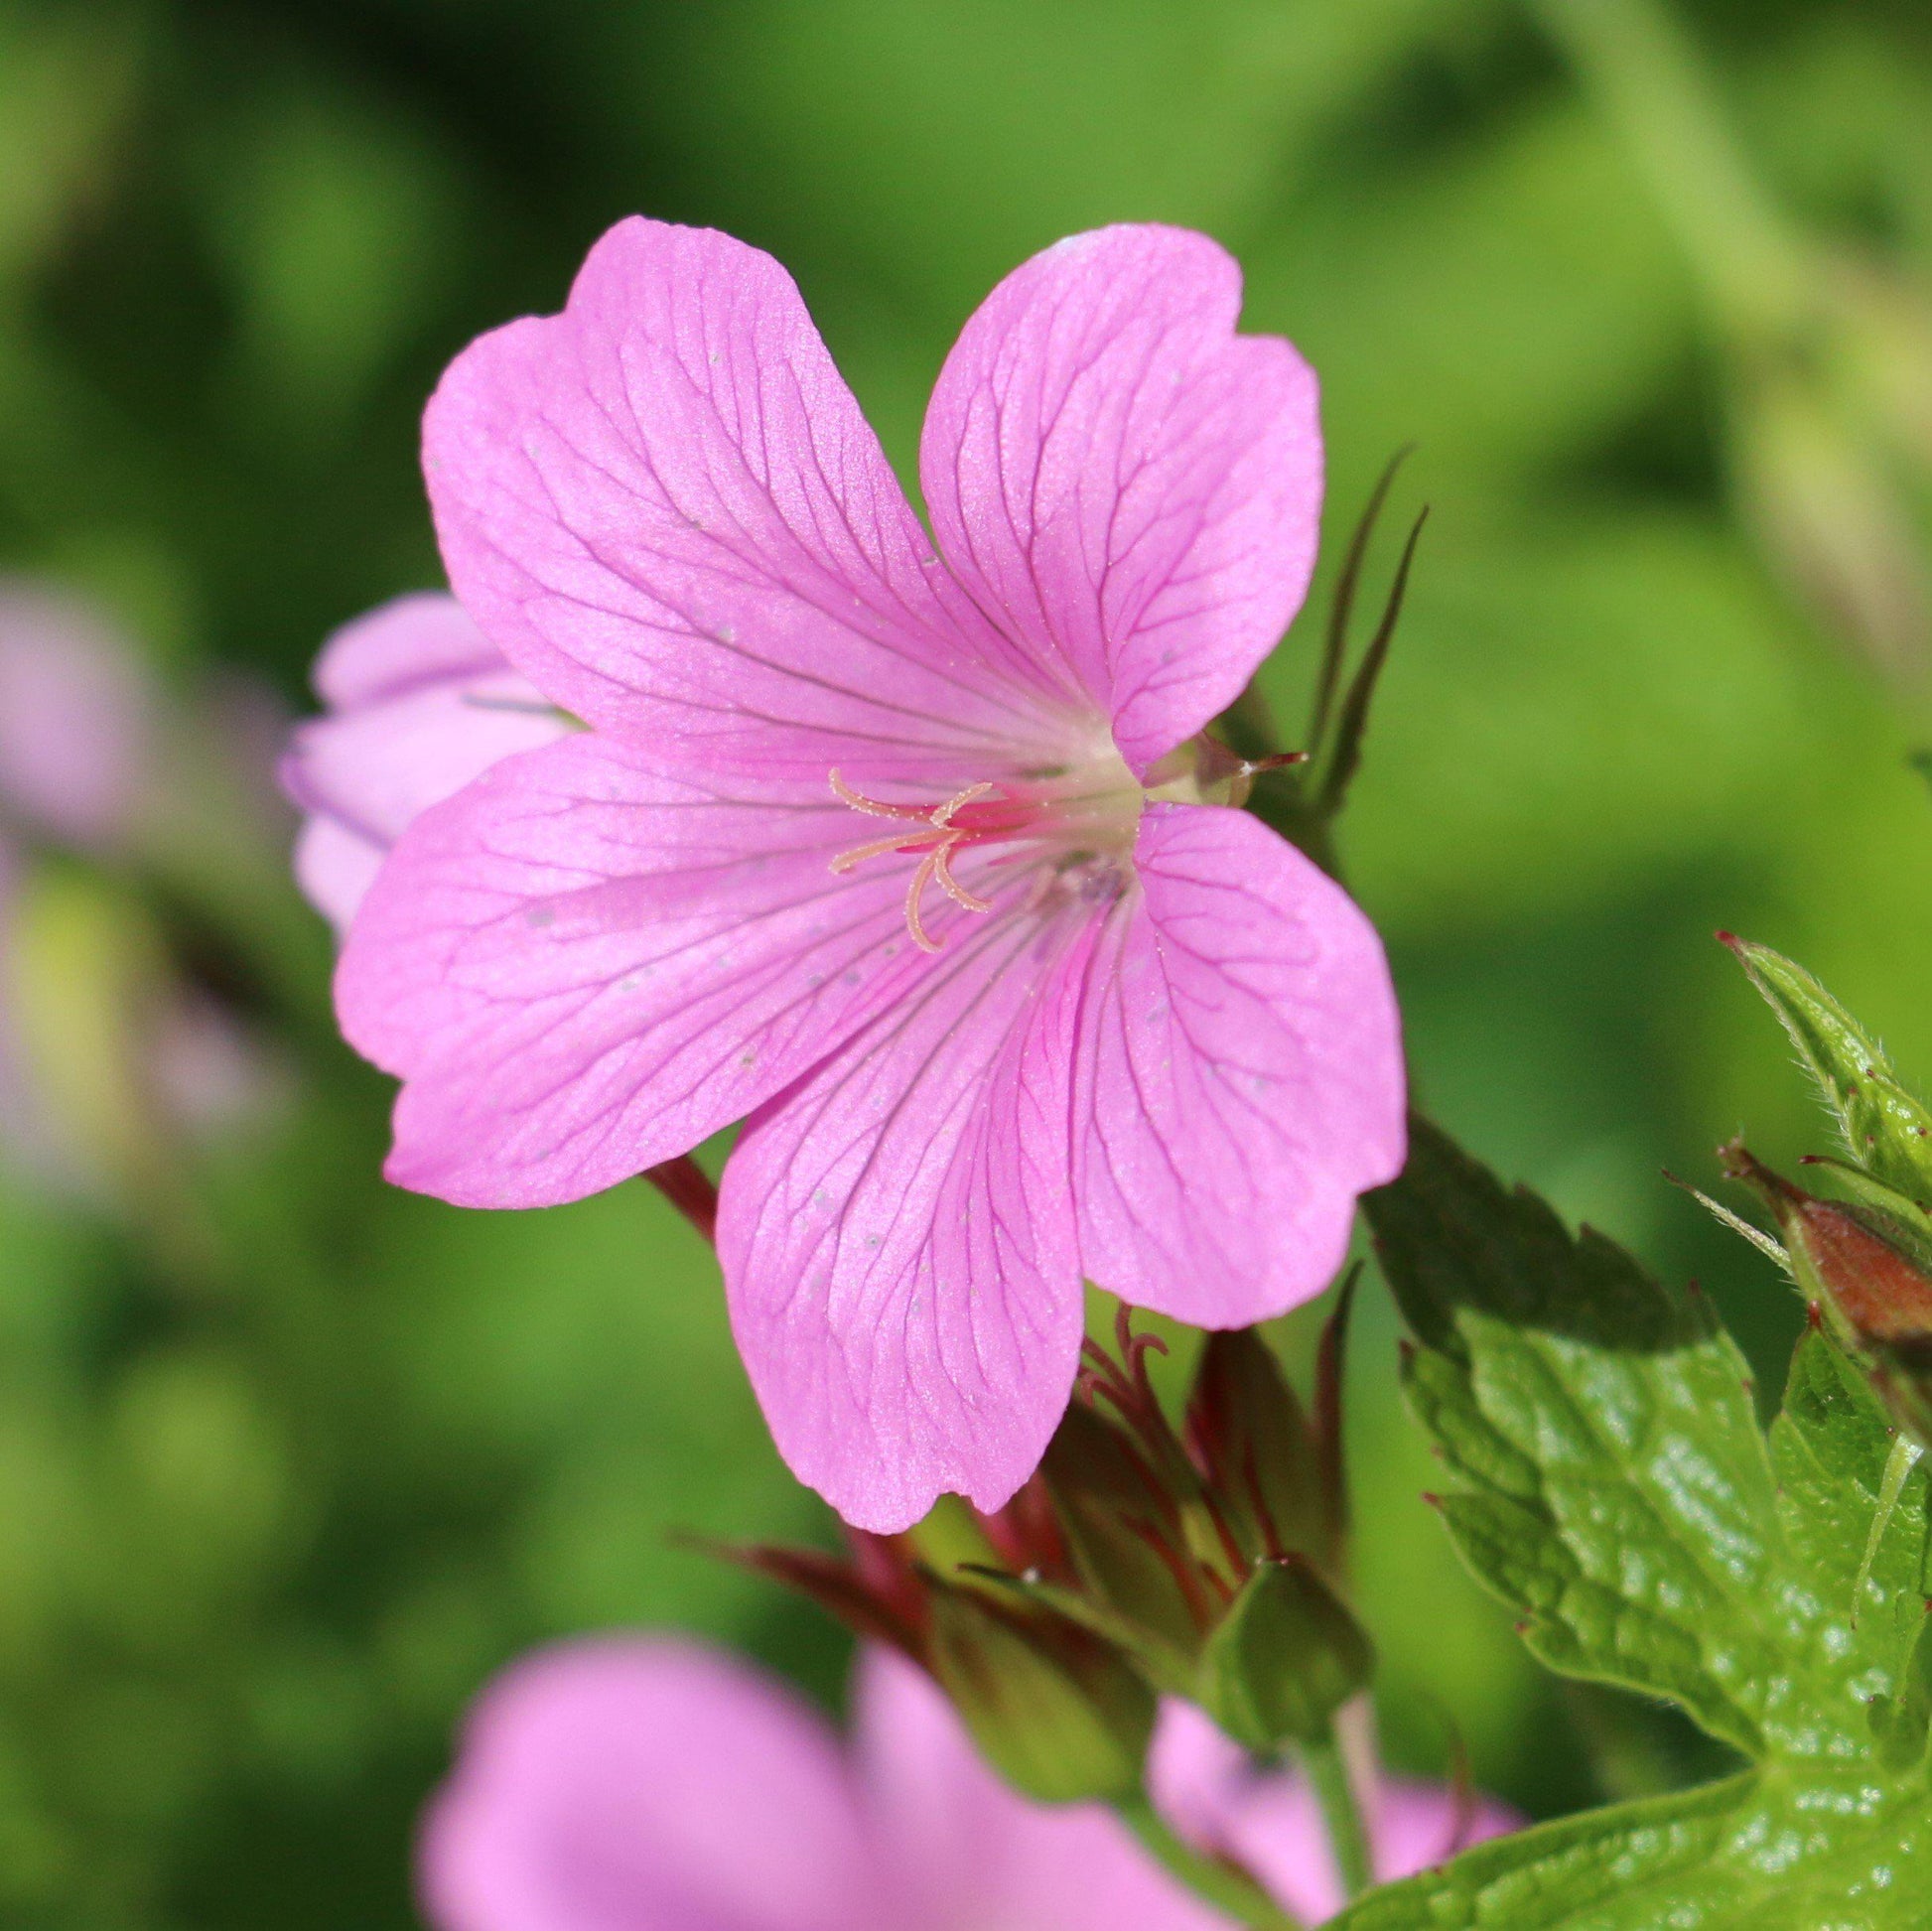 Pleasant Pink-Hued Bloom of the  "Wargrave Pink" Geranium